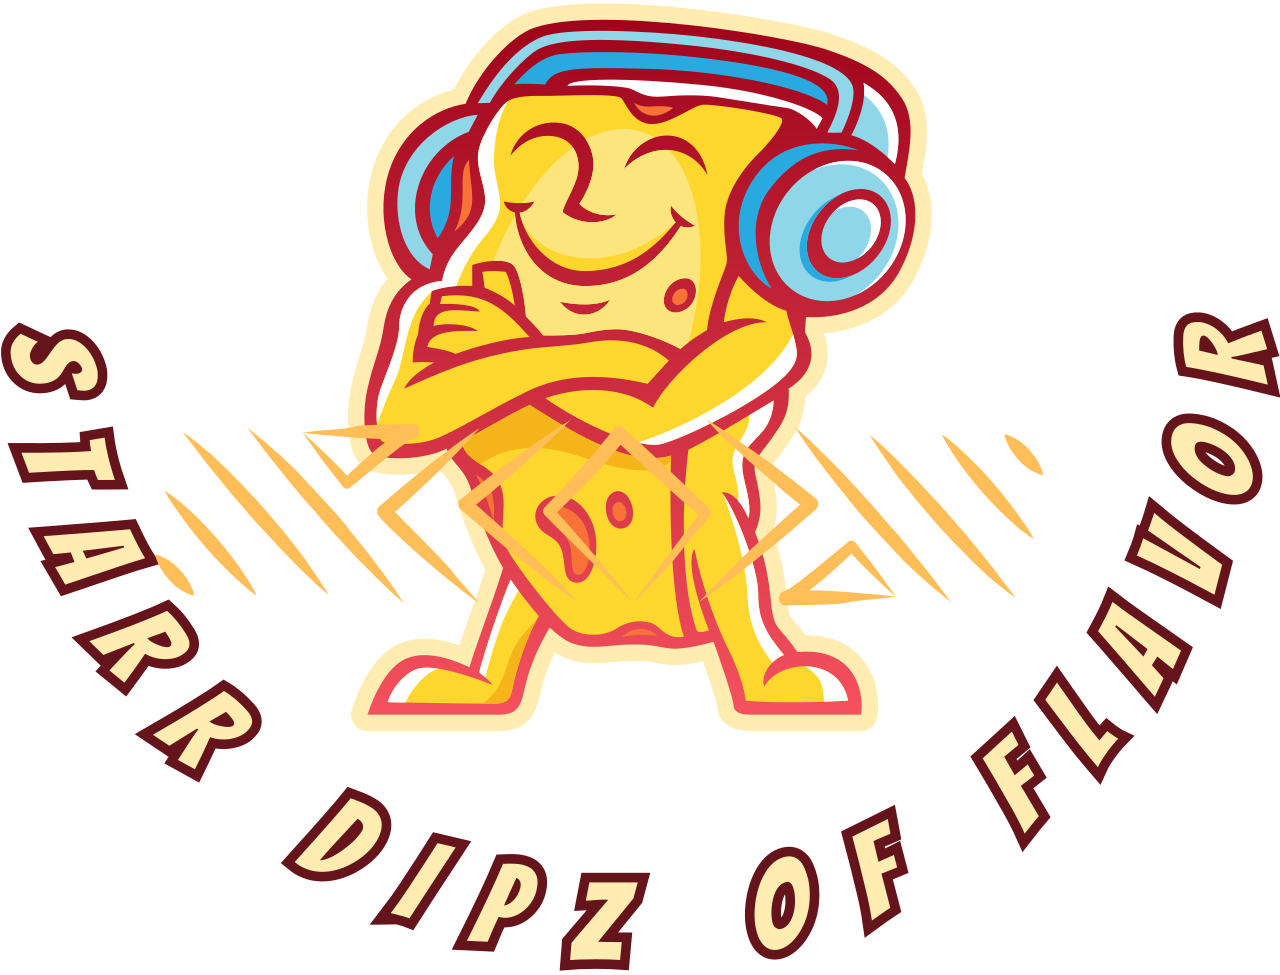 STARR DIPZ OF FLAVOR's logo